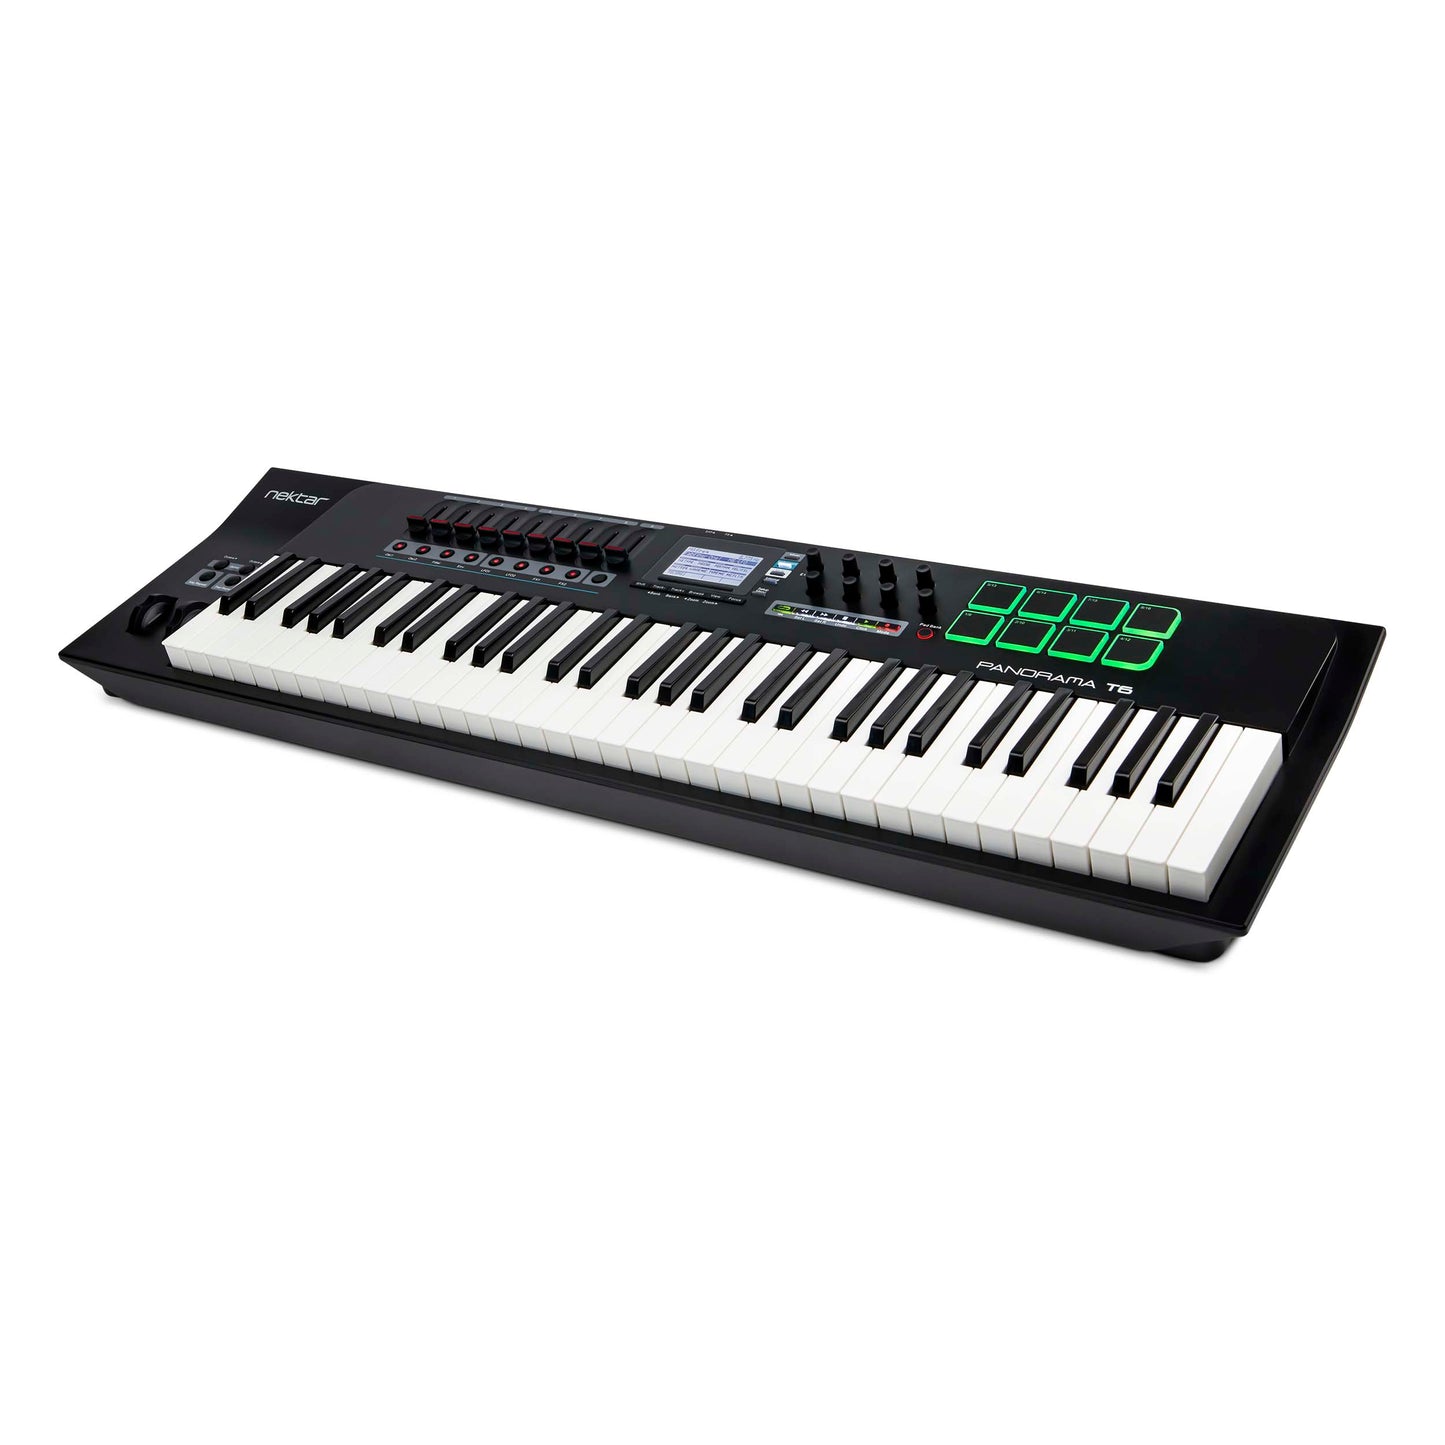 Nektar Panorama T6 61-Key Advanced MIDI Daw Keyboard Controller